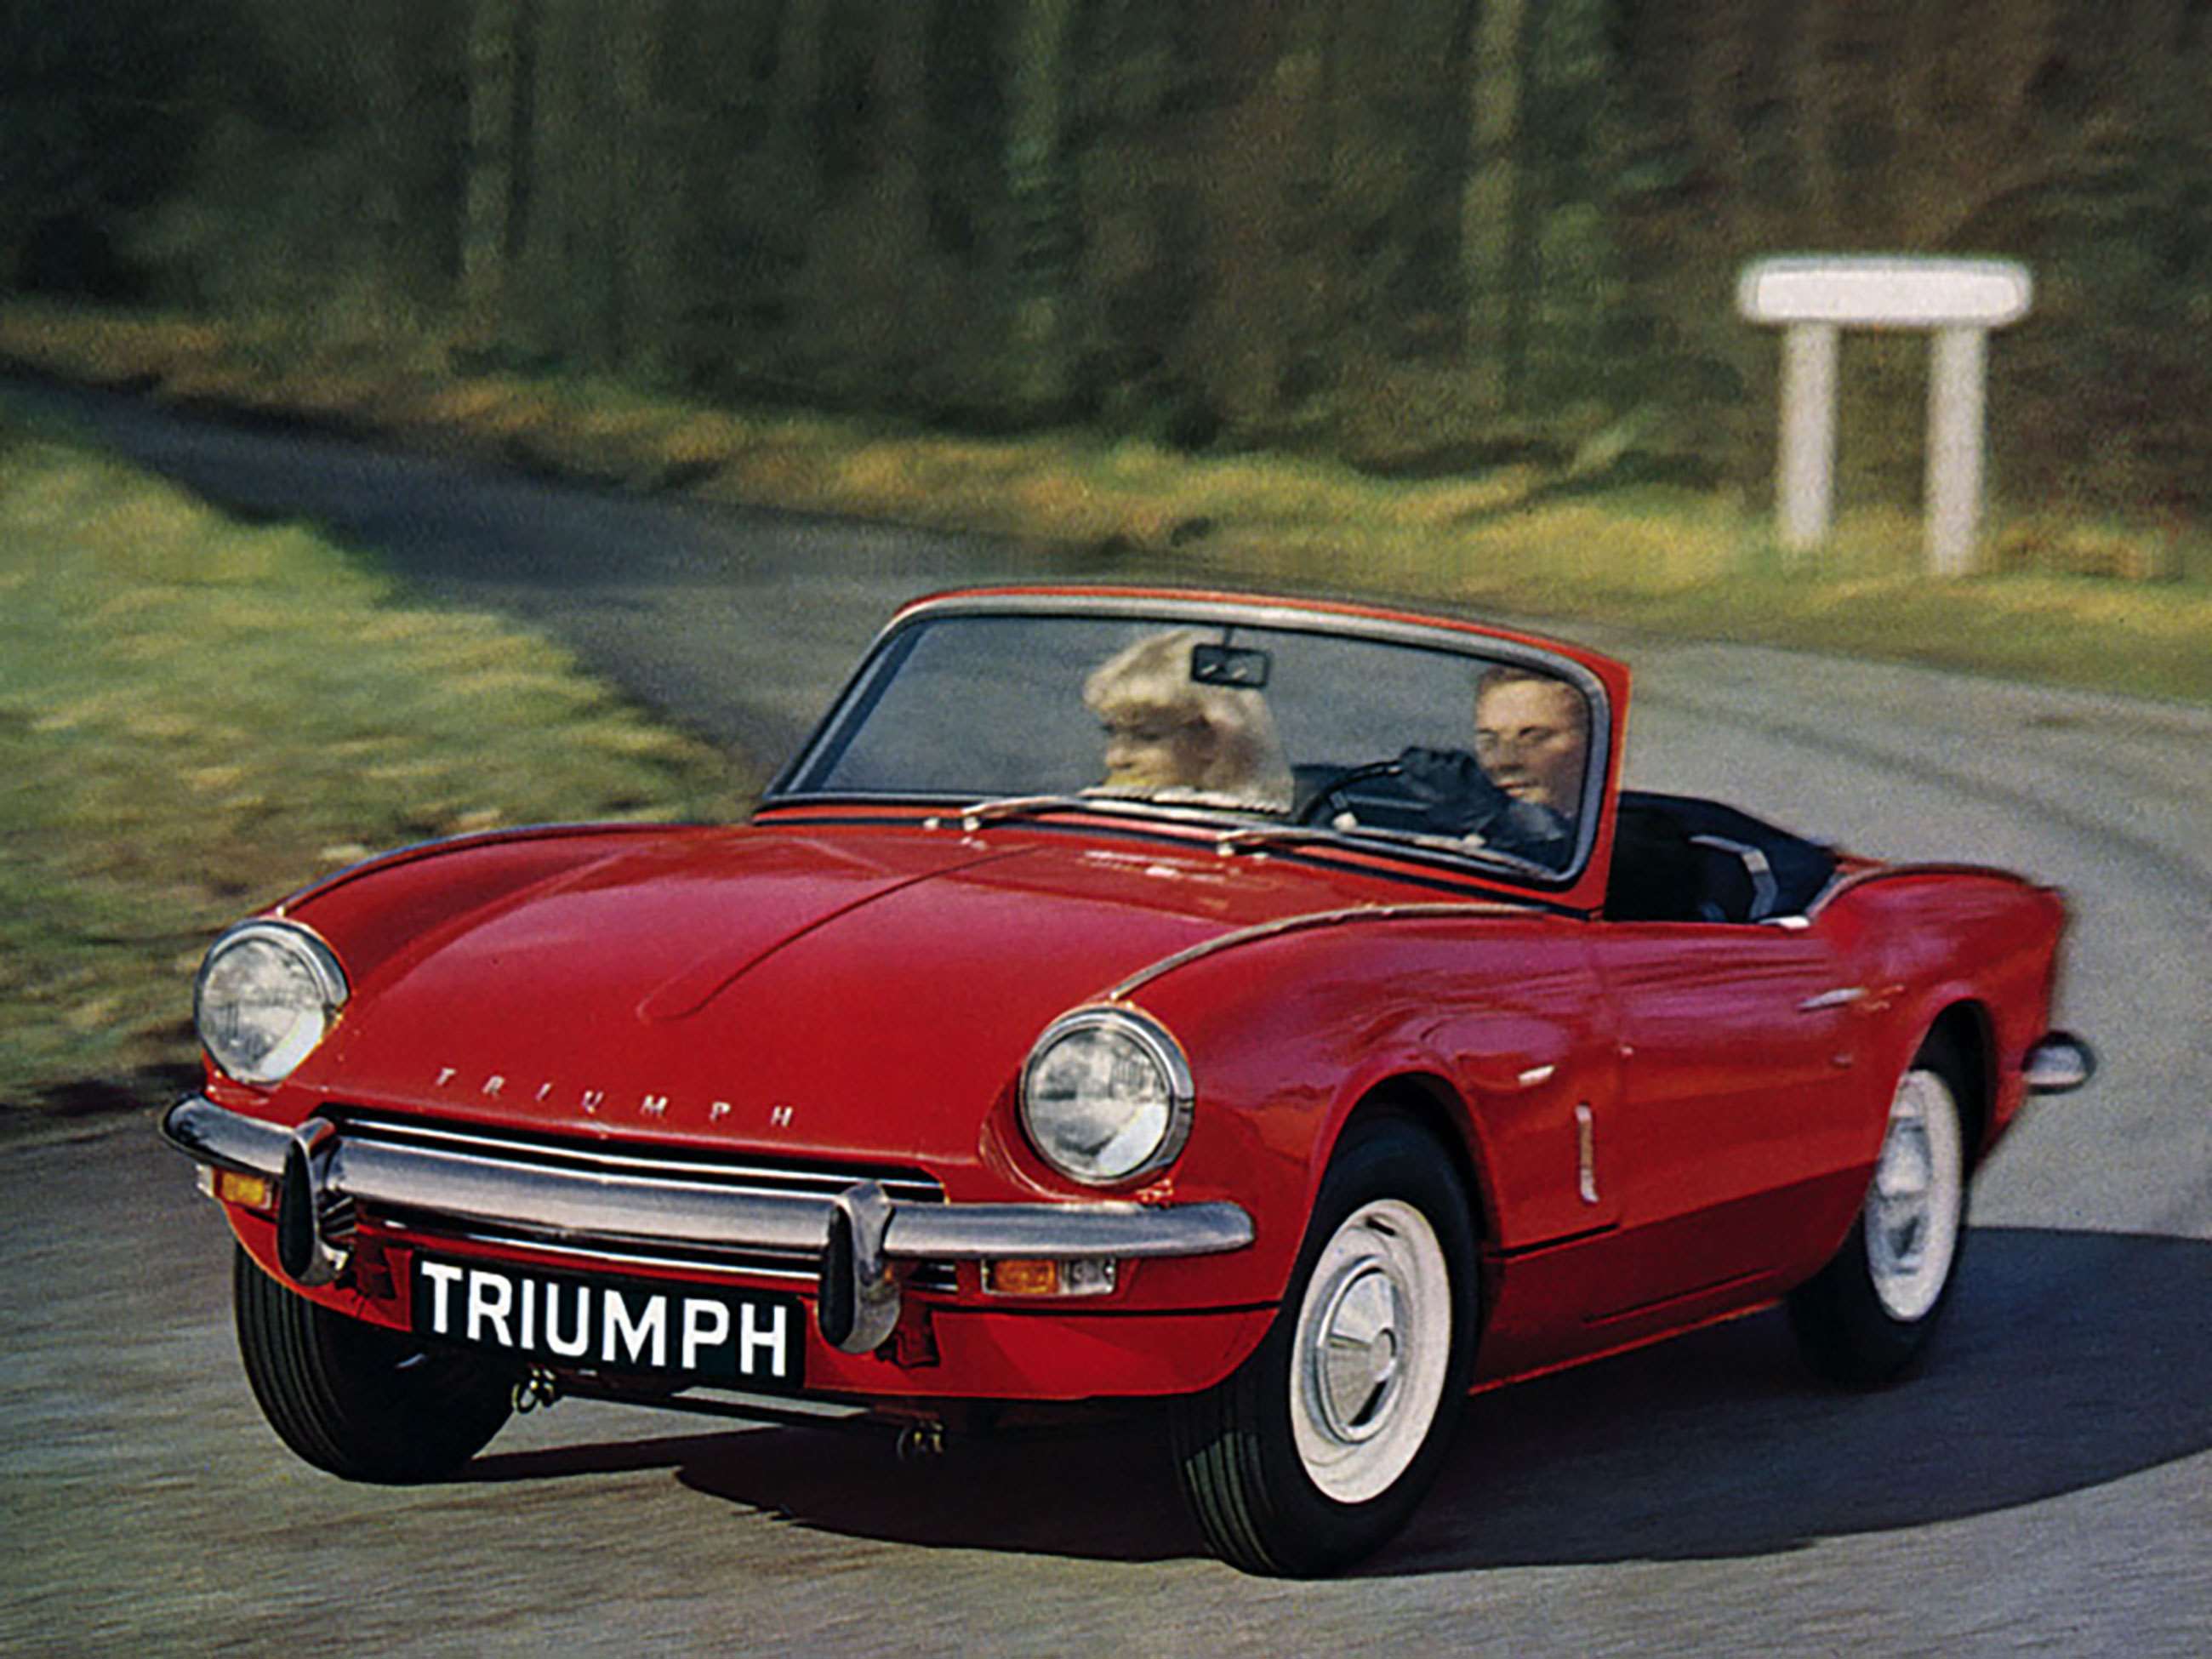 best-triumph-road-cars-list-triumph-spitfire-goodwood-10052021.jpg